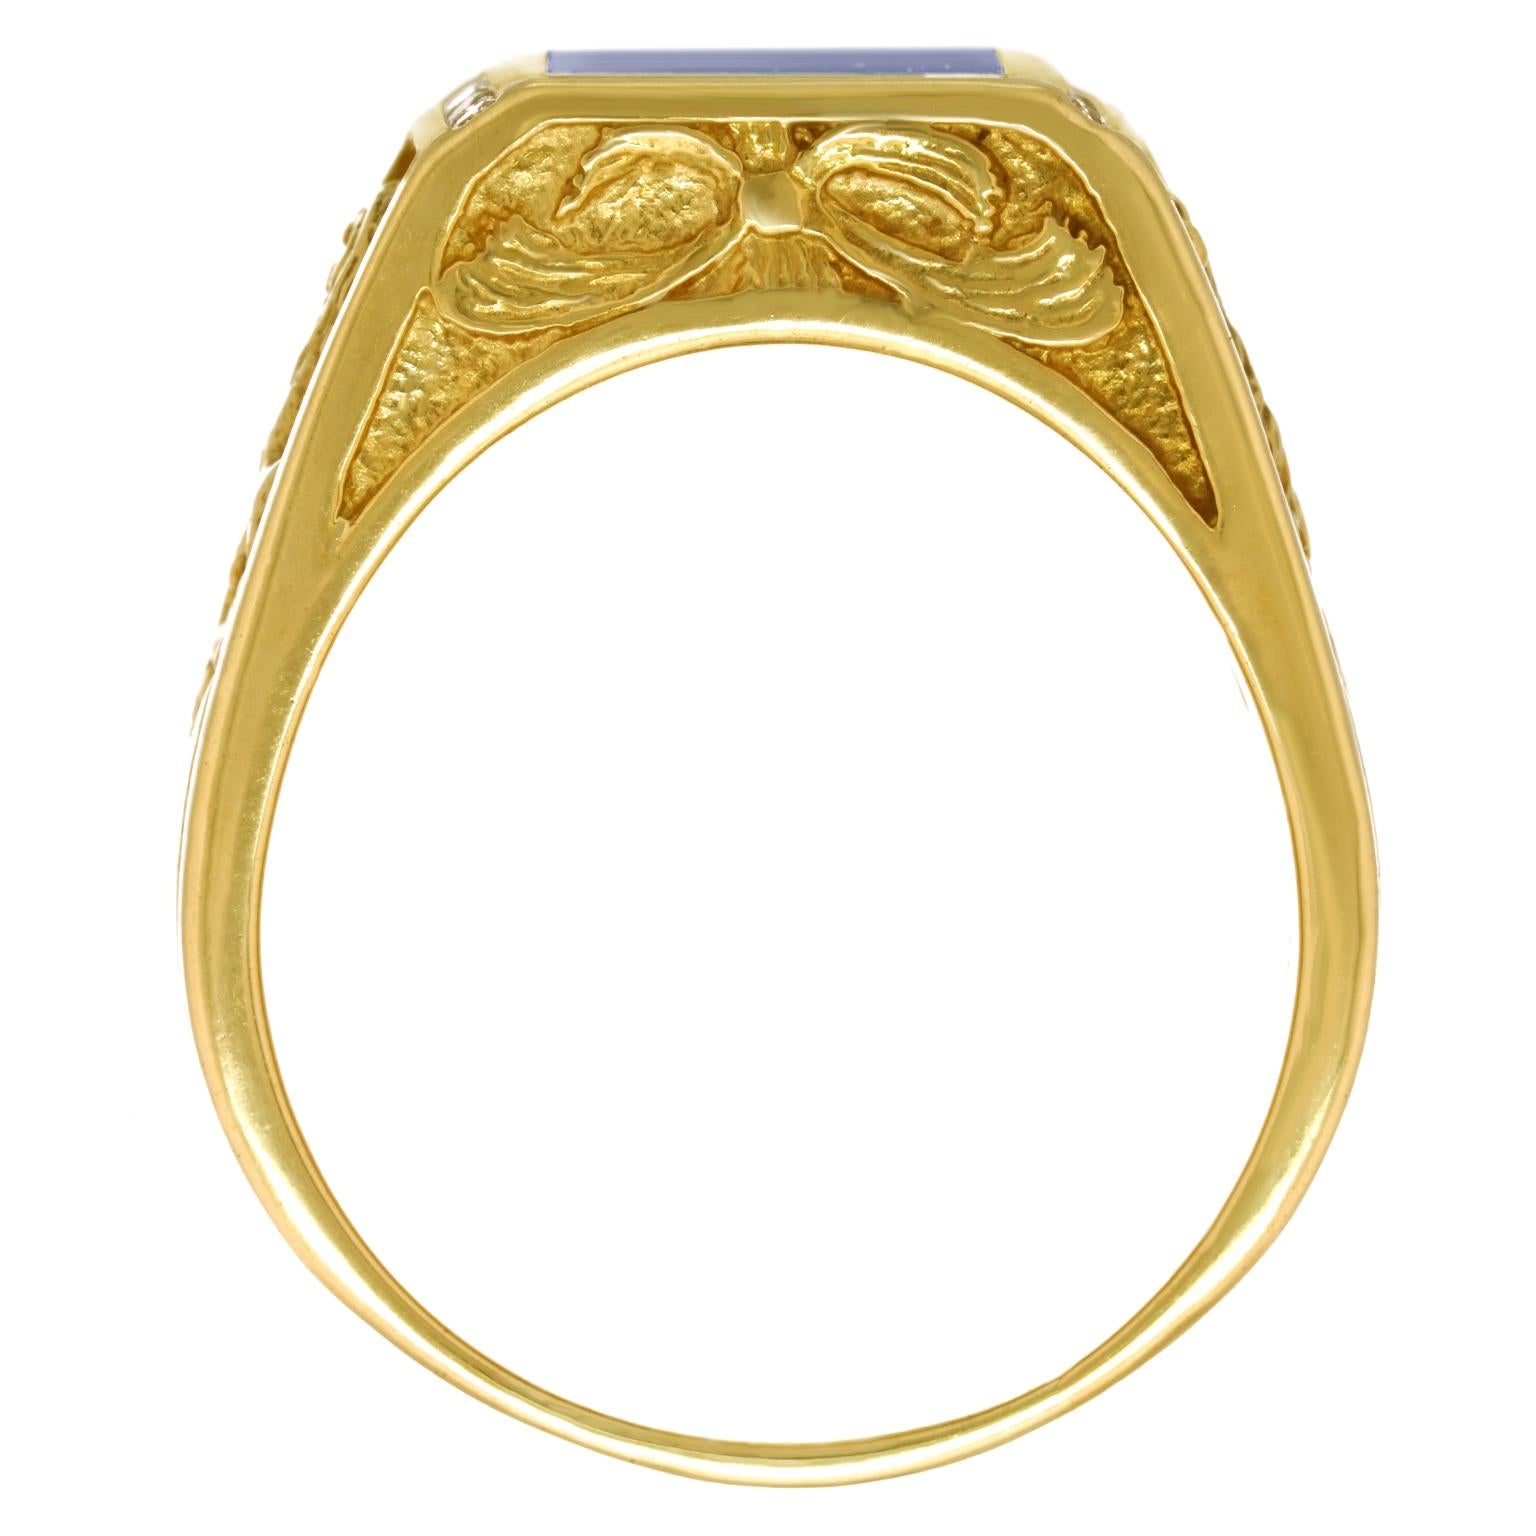 Massive Renaissance Revival Gold Ring 4